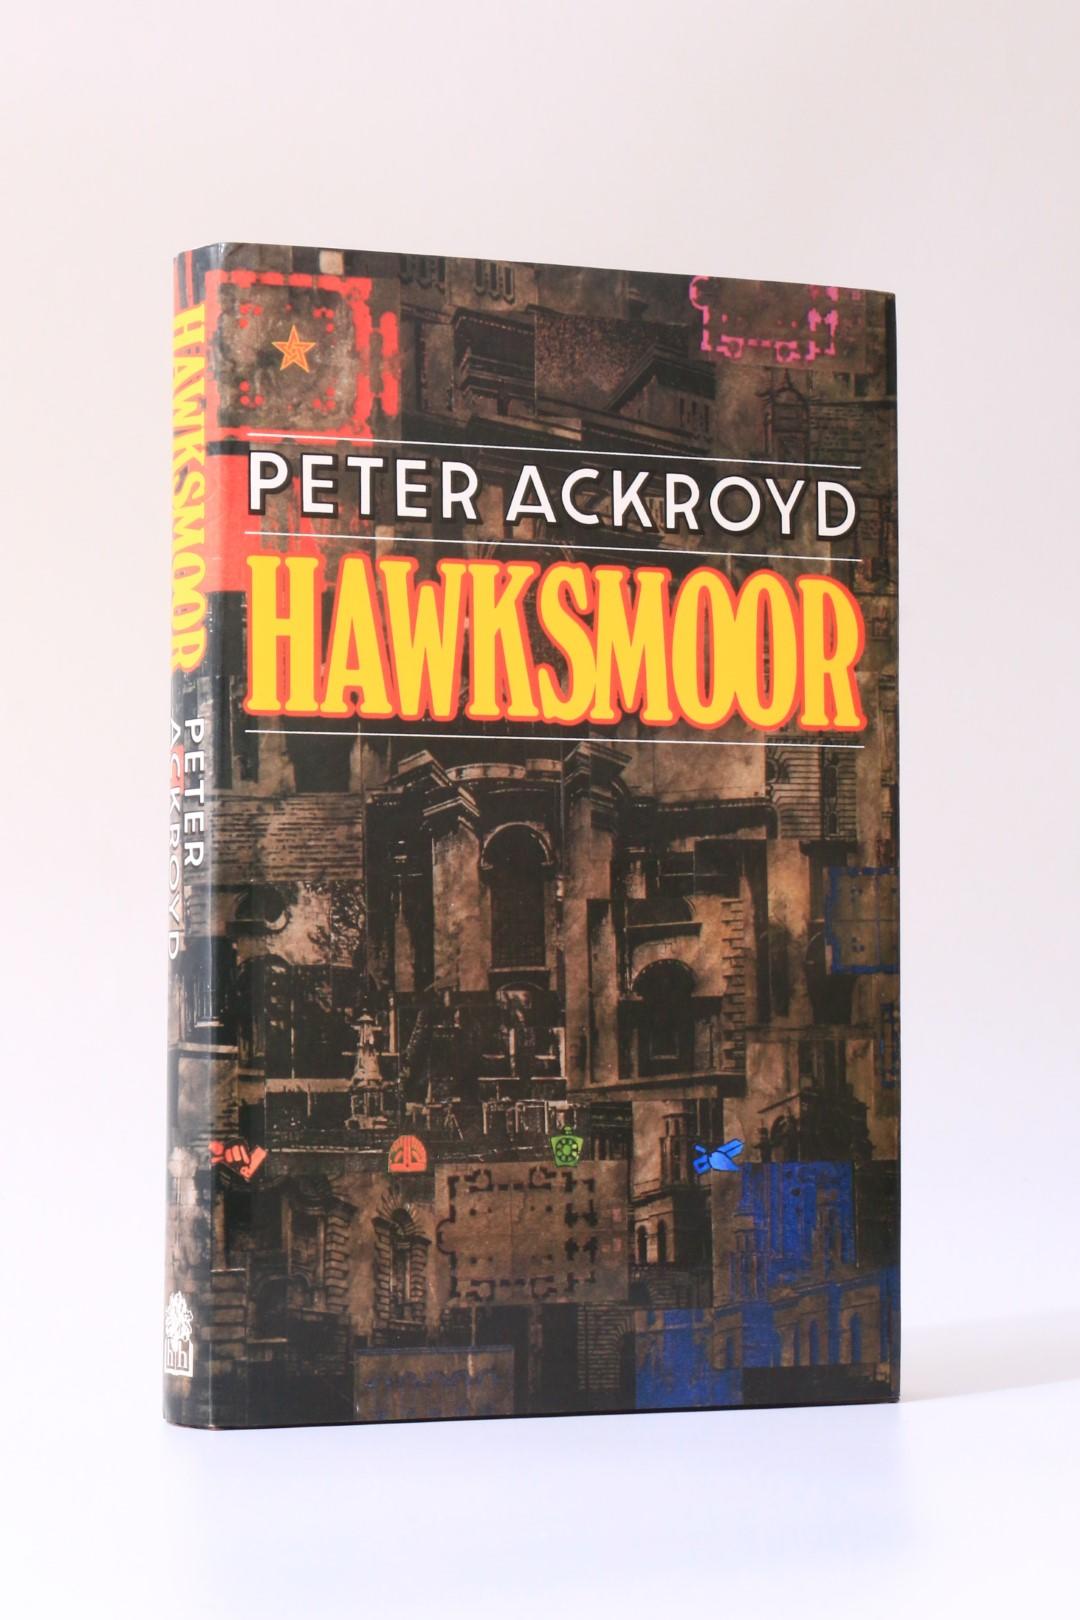 Peter Ackroyd - Hawksmoor - Hamish Hamilton, 1985, First Edition.